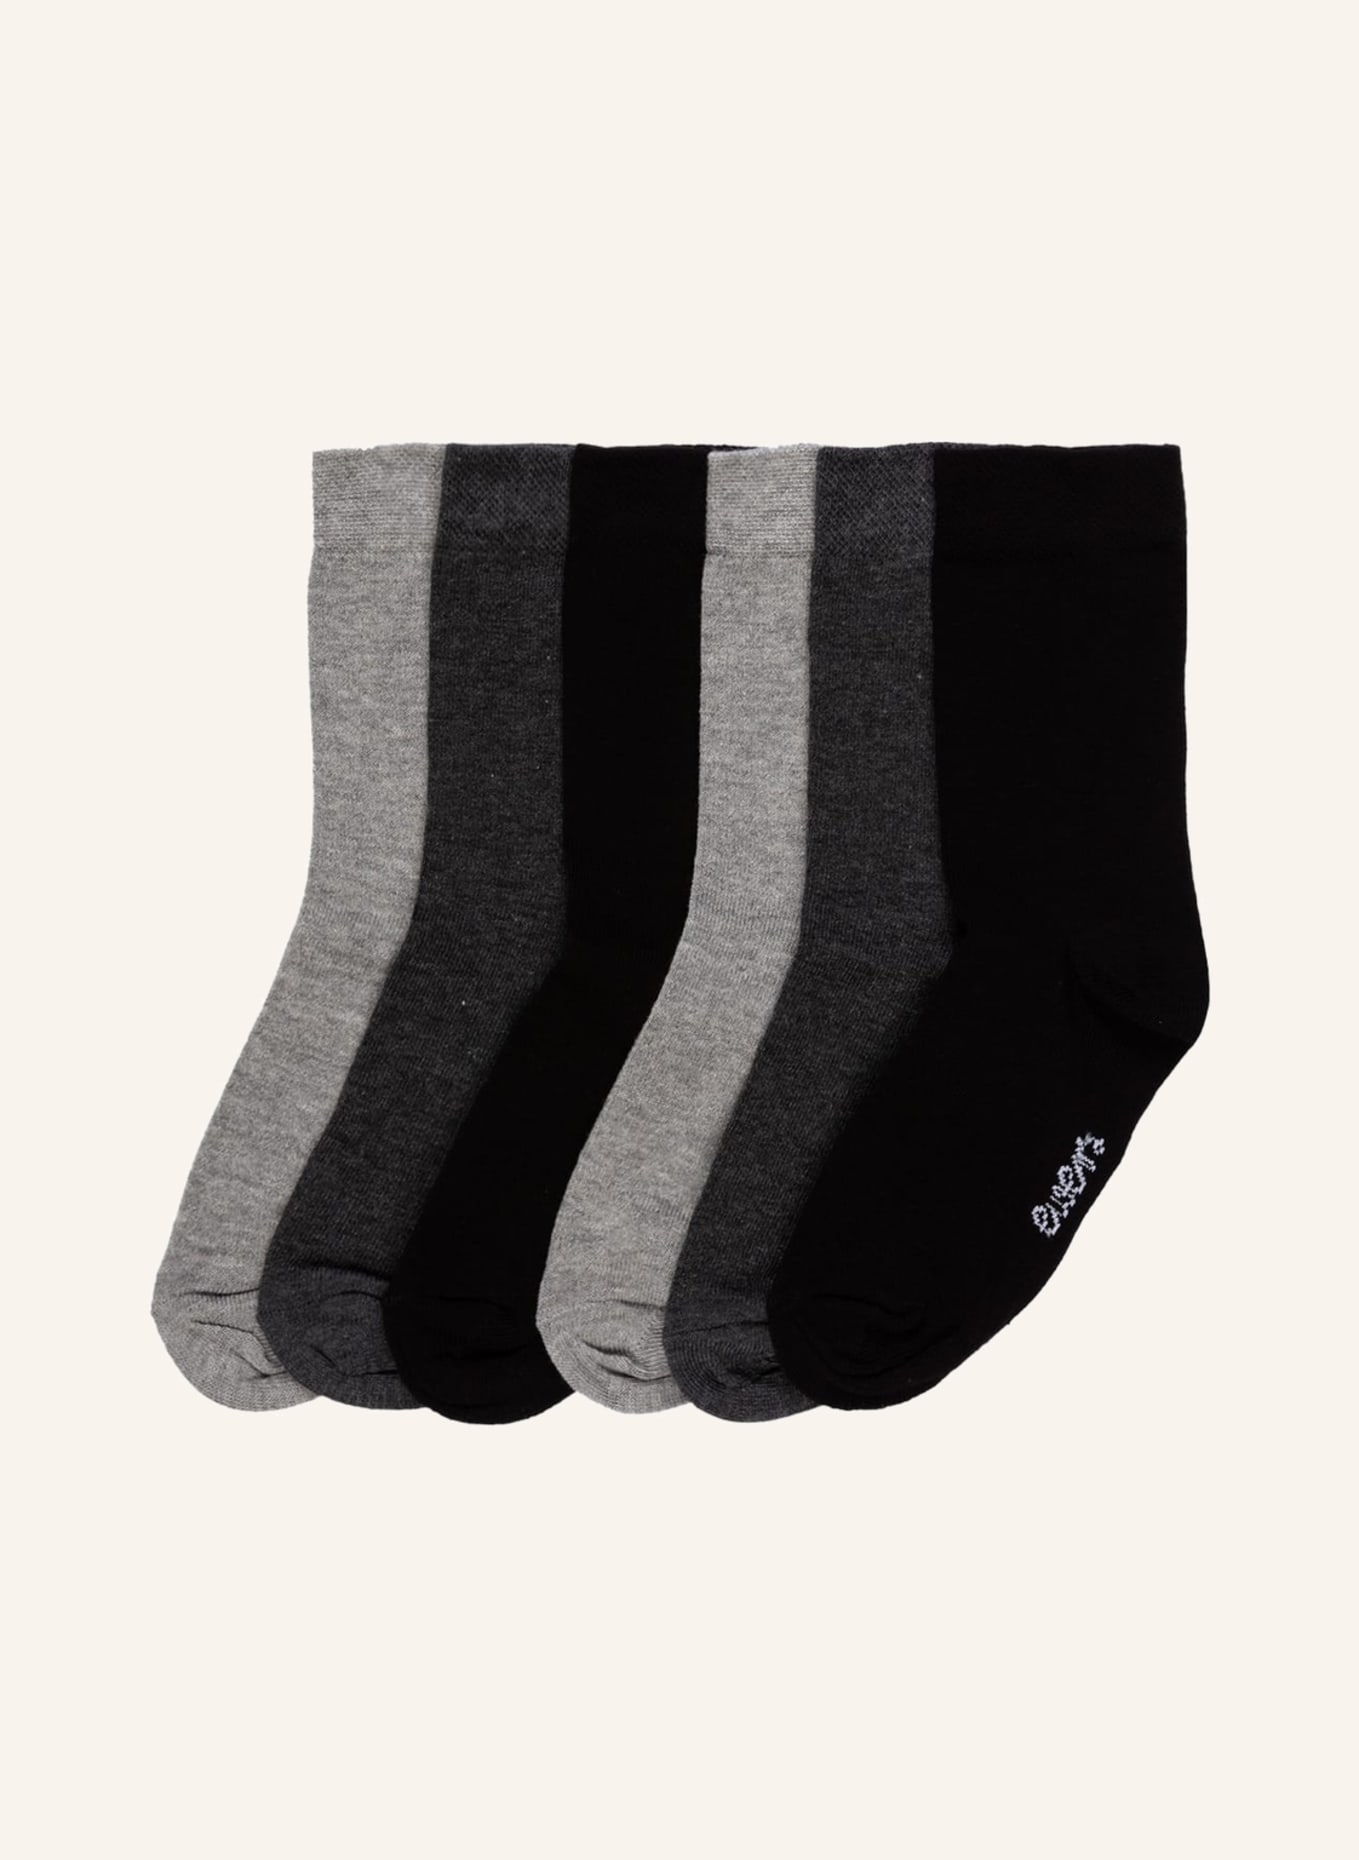 ewers COLLECTION 6er-Pack Socken, Farbe: 50 50 schw - grau (Bild 1)